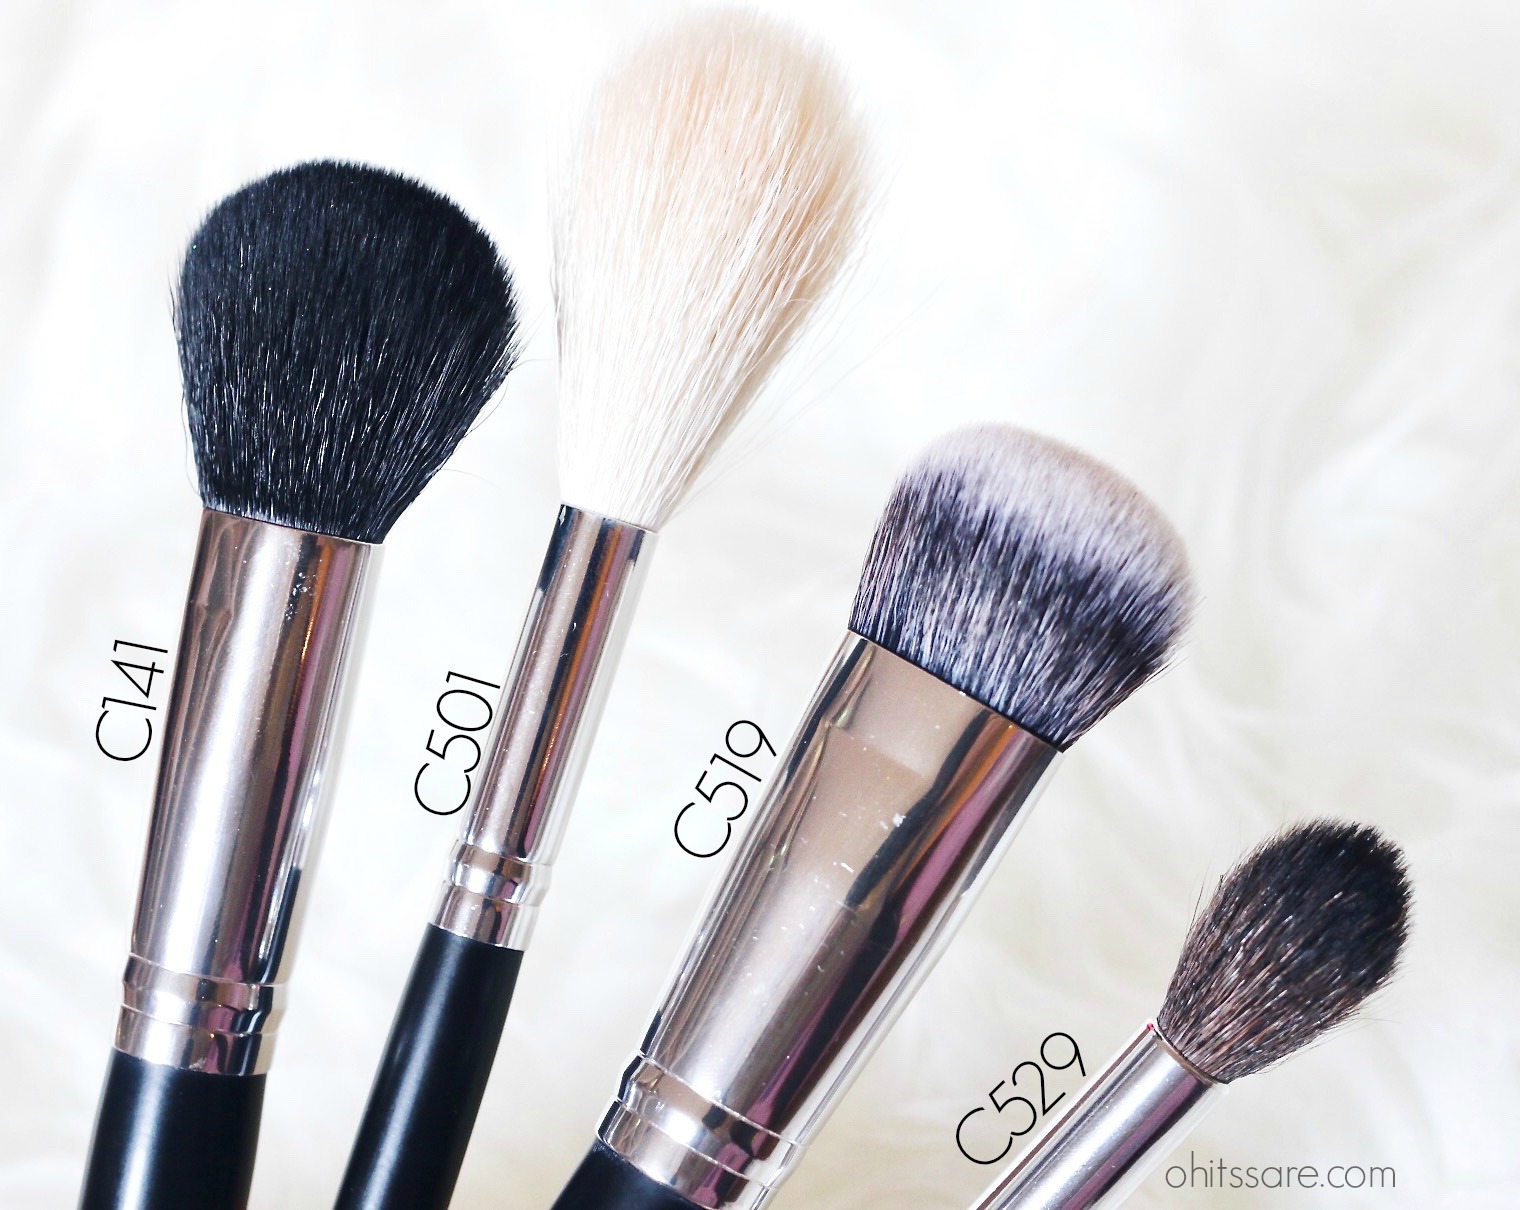 crown brushes,haul,review,eyeshadow,makeup brushes, highlight,contour,highlight & contour, crown brushes eyeshadow brushes, 